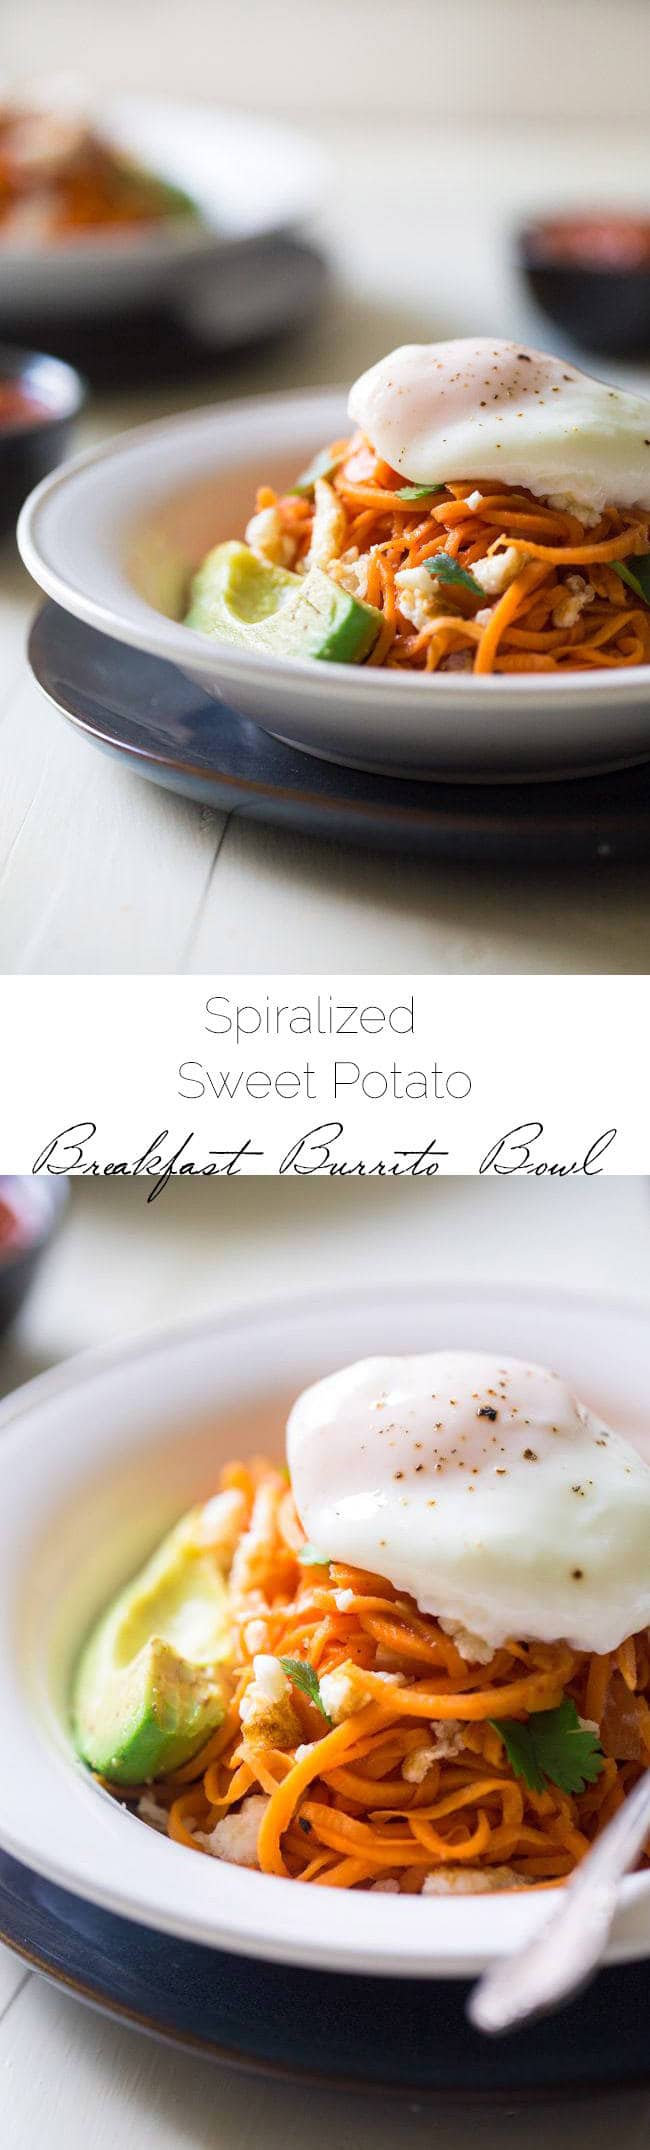 Spiralized Sweet Potato Breakfast Burrito Bowl - 7 Ingredients, gluten free, Paleo and ready in 20 minutes! Your new favorite breakfast OR dinner! | Foodfaithfitness.com | @FoodFaithFit